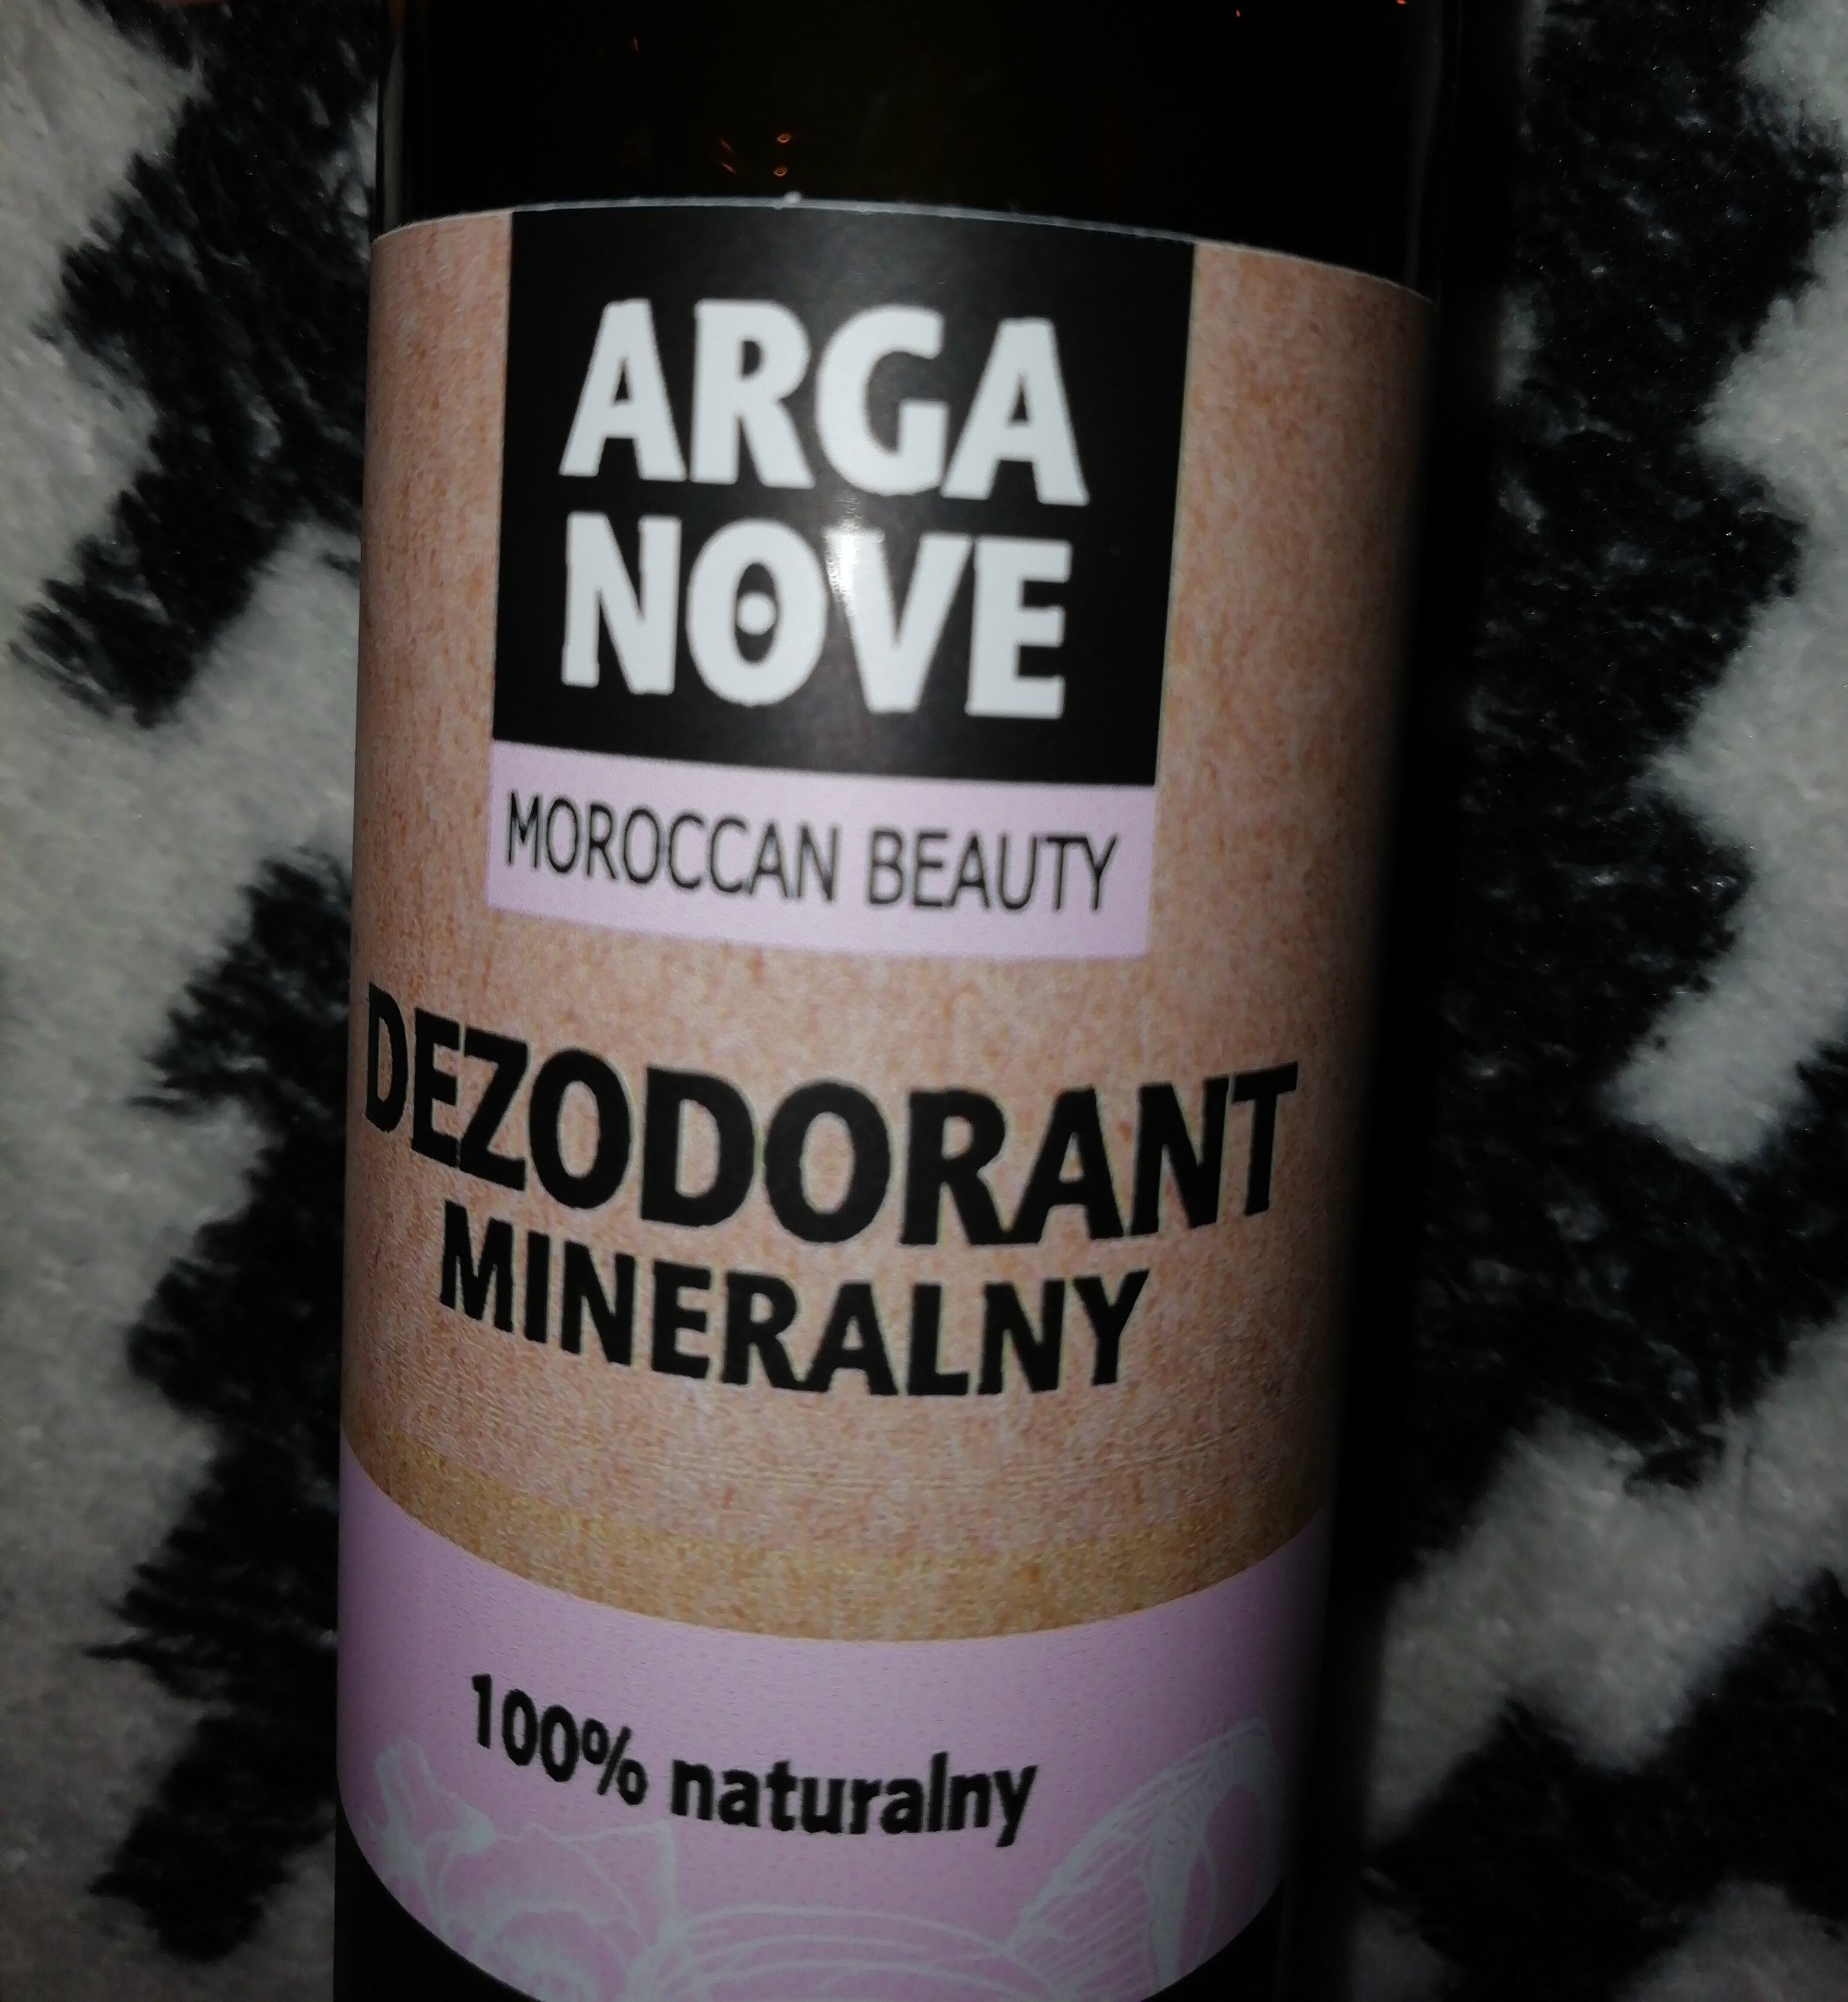 Dezodorant mineralny róża z kokosem - Product - pl